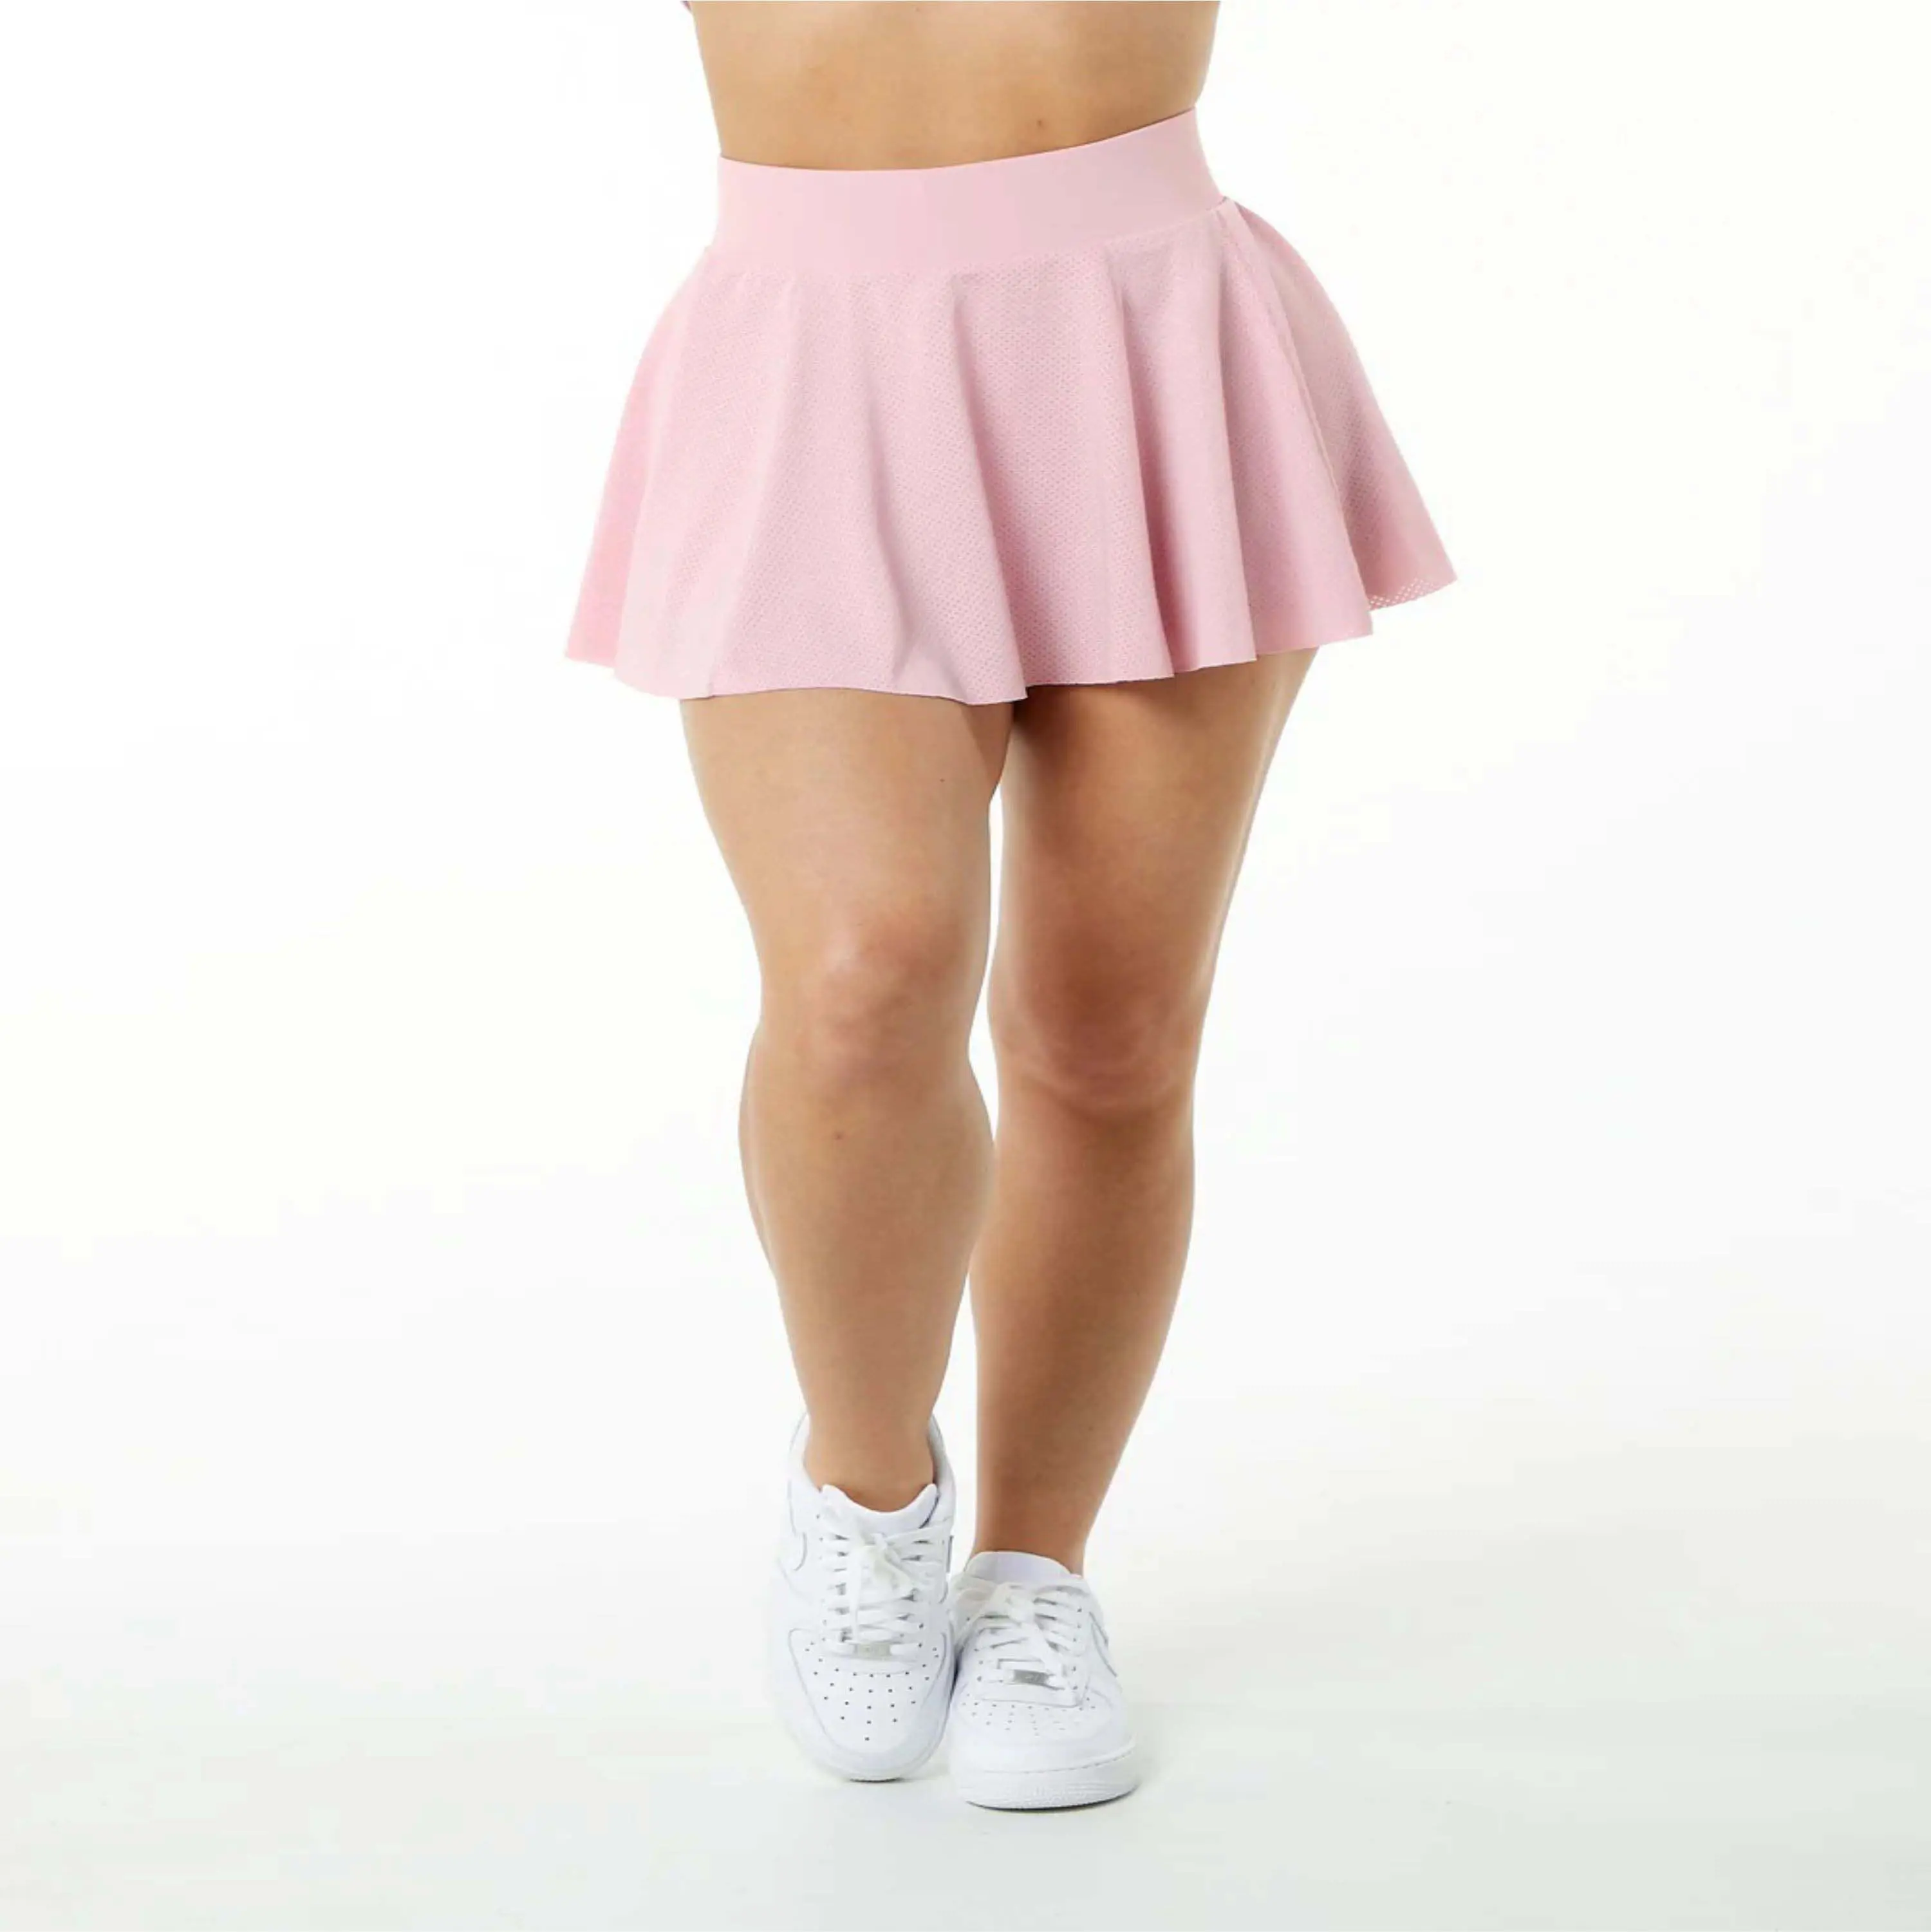 Hohe taille Damenlederrock XL-Größe atmungsaktiv Polyester Baumwolltrikot gestrickt rosa Kompression gefüttert Netz mit Shorts